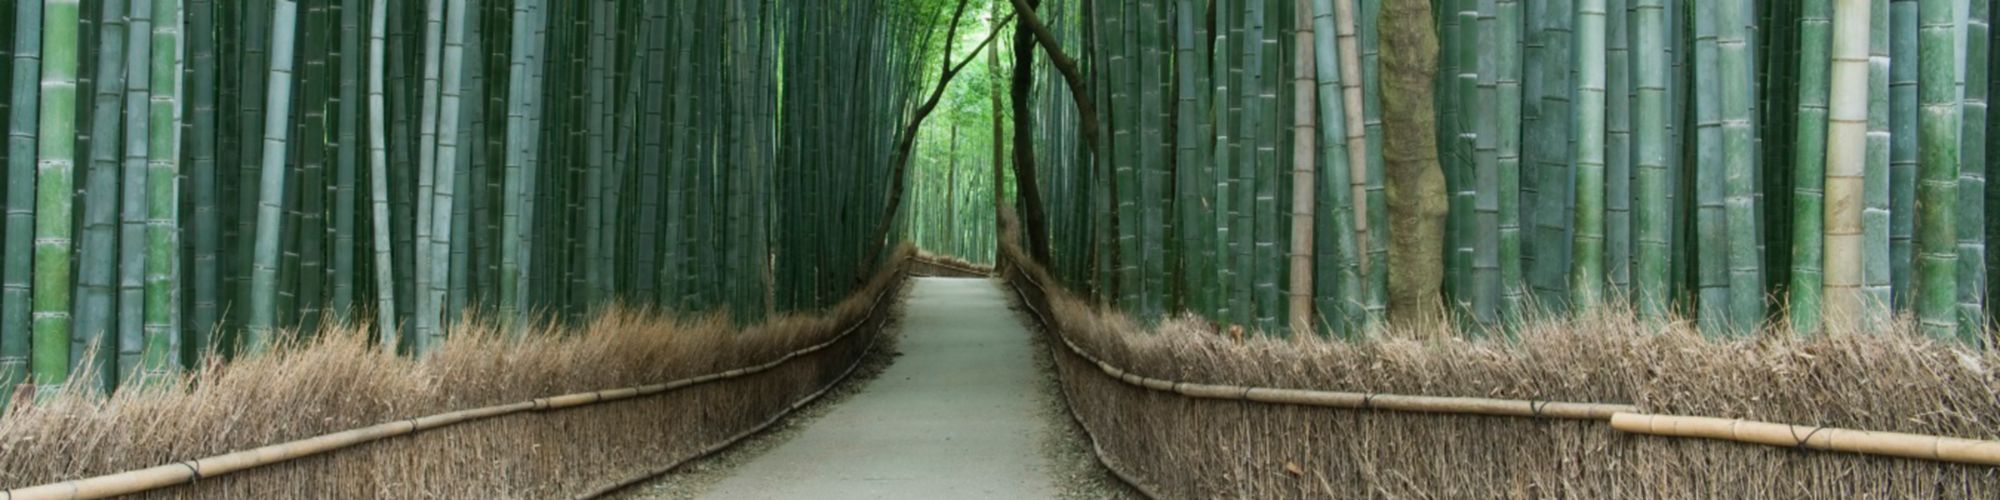 Path through bamboo trees